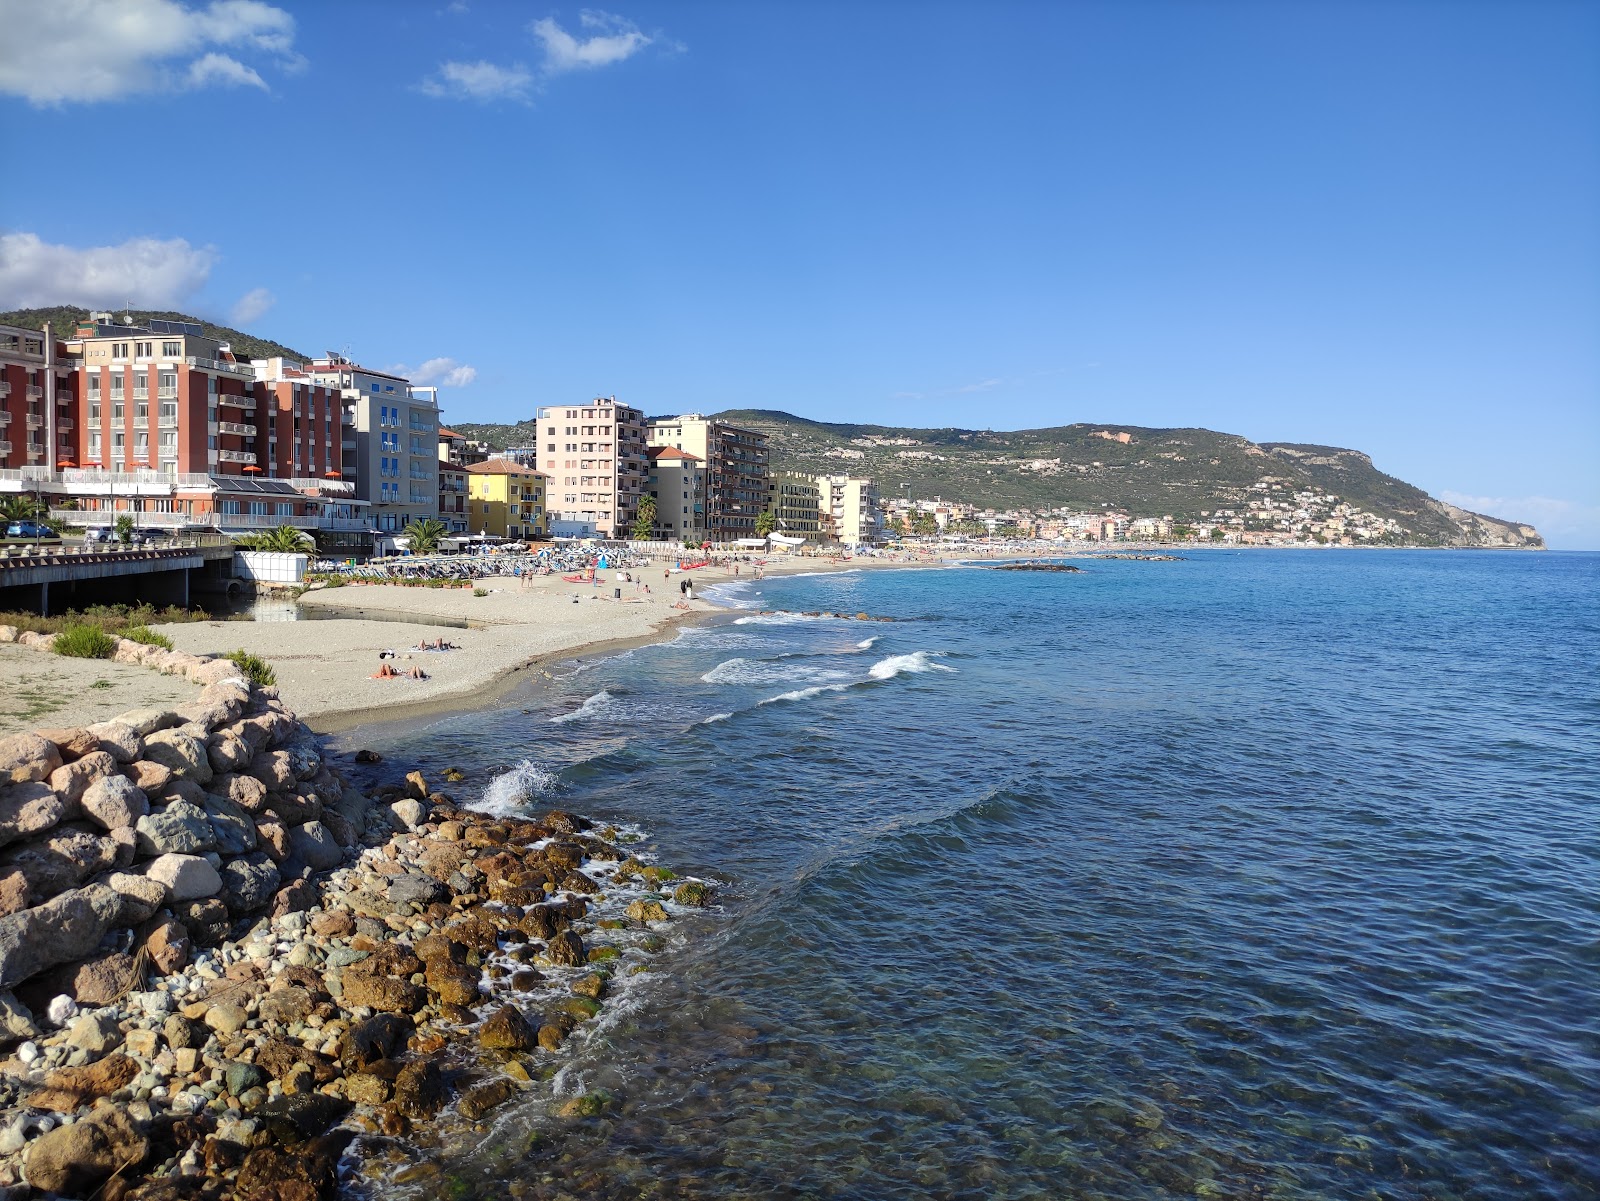 Spiaggia di Don Giovanni Bado'in fotoğrafı mavi saf su yüzey ile